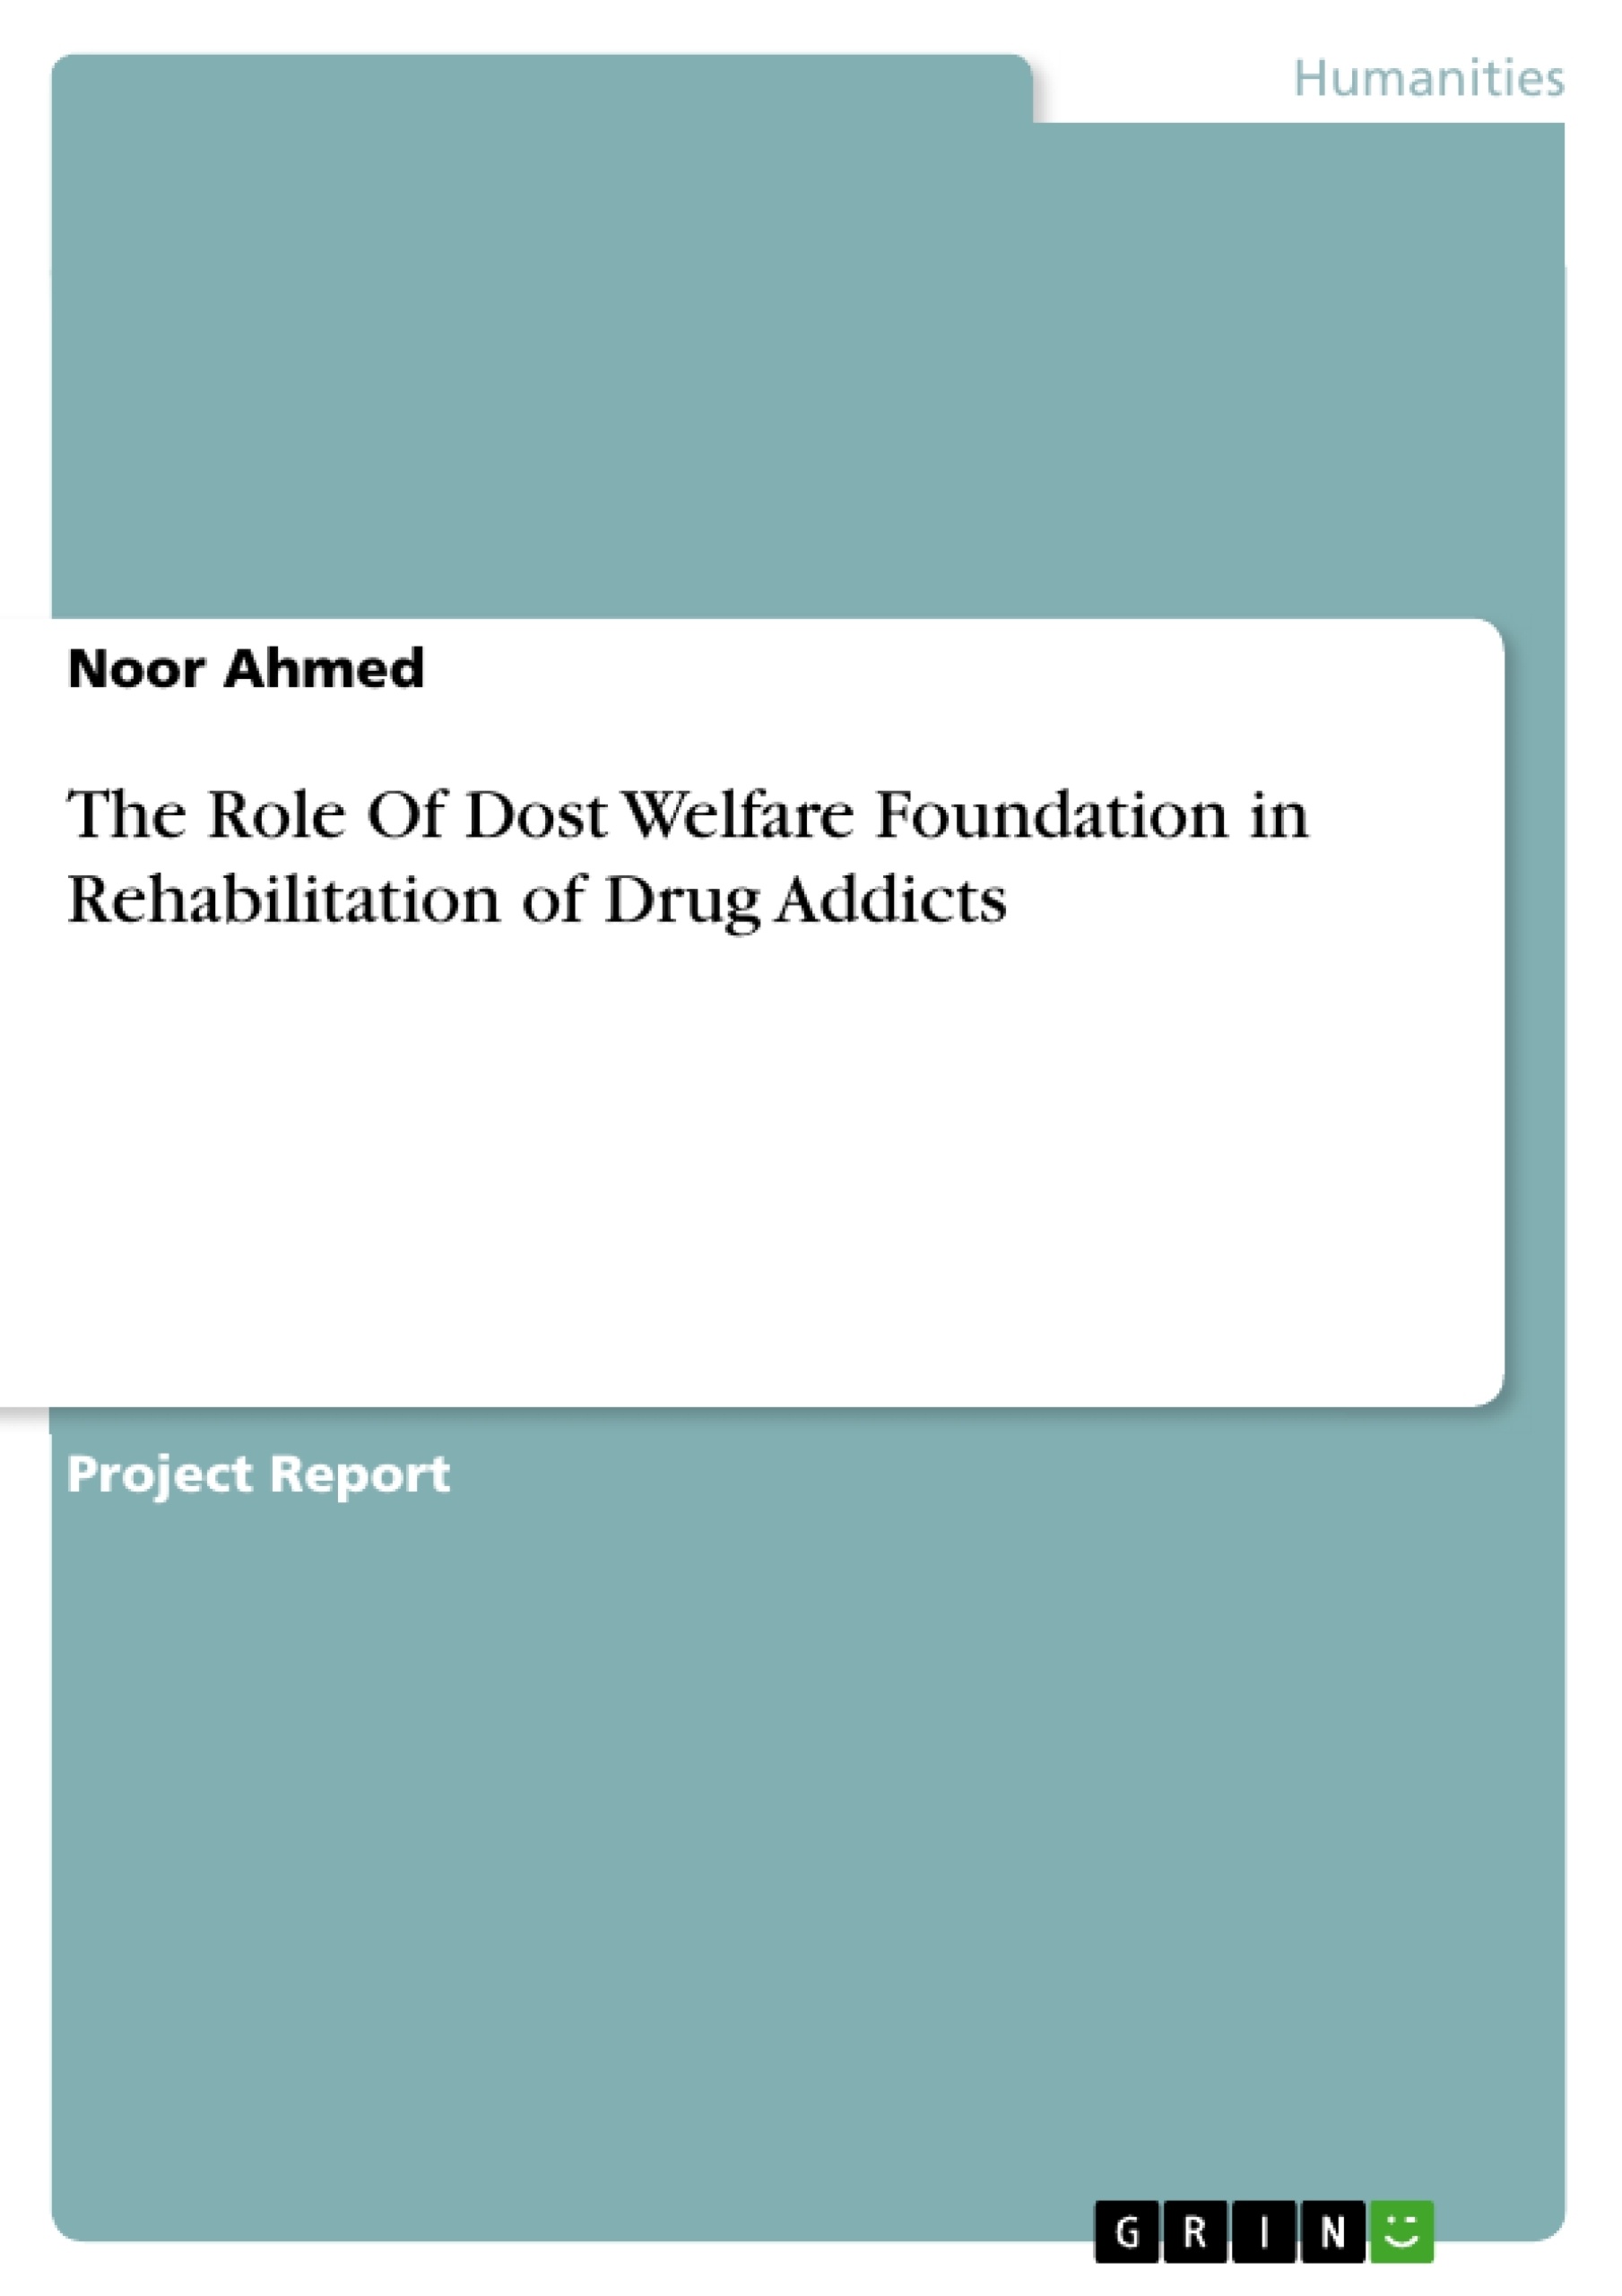 Thesis on drug addiction in pakistan